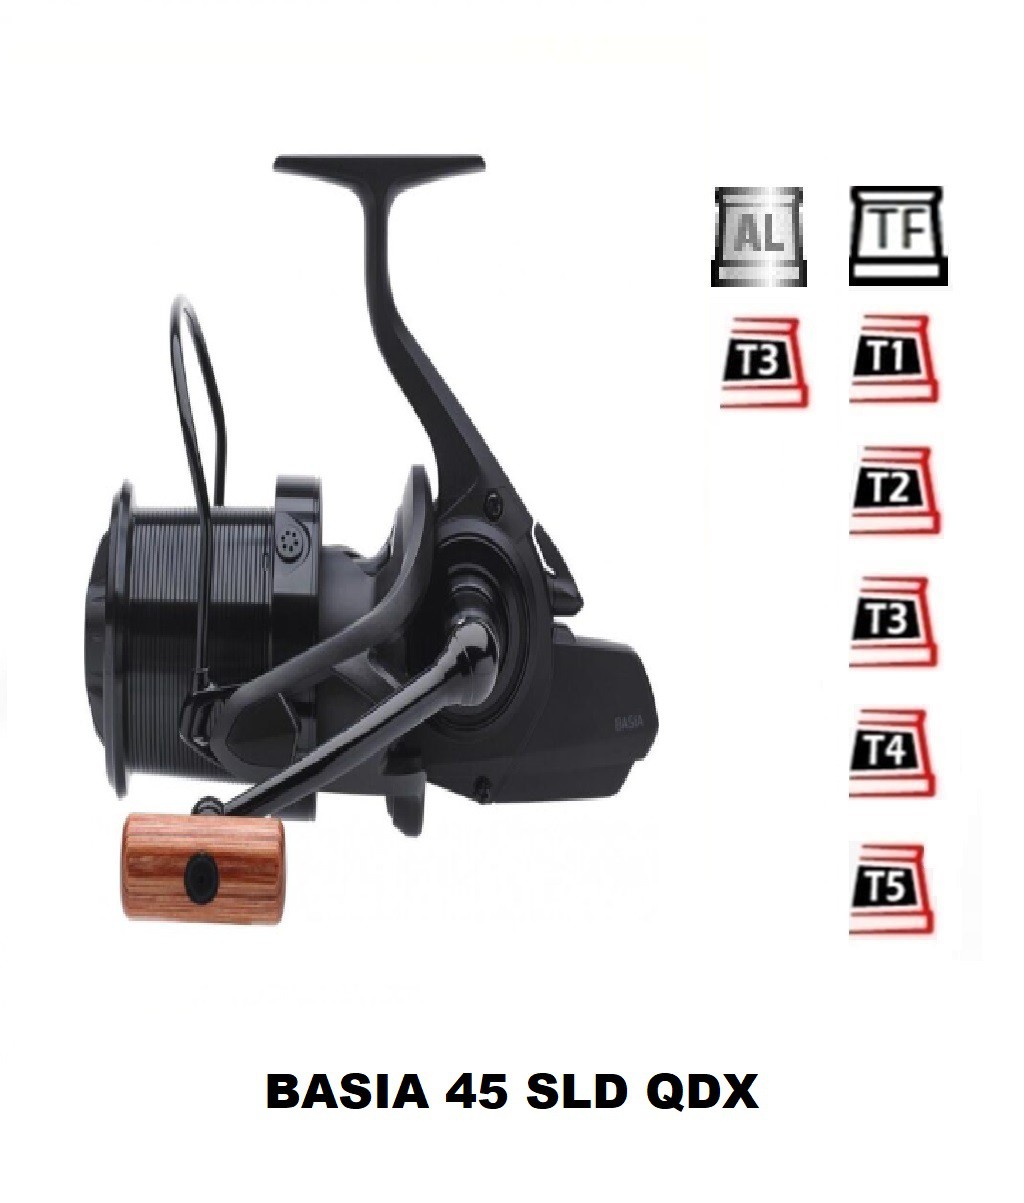 Tournament Basia 45 SLD QDX Spare Spools